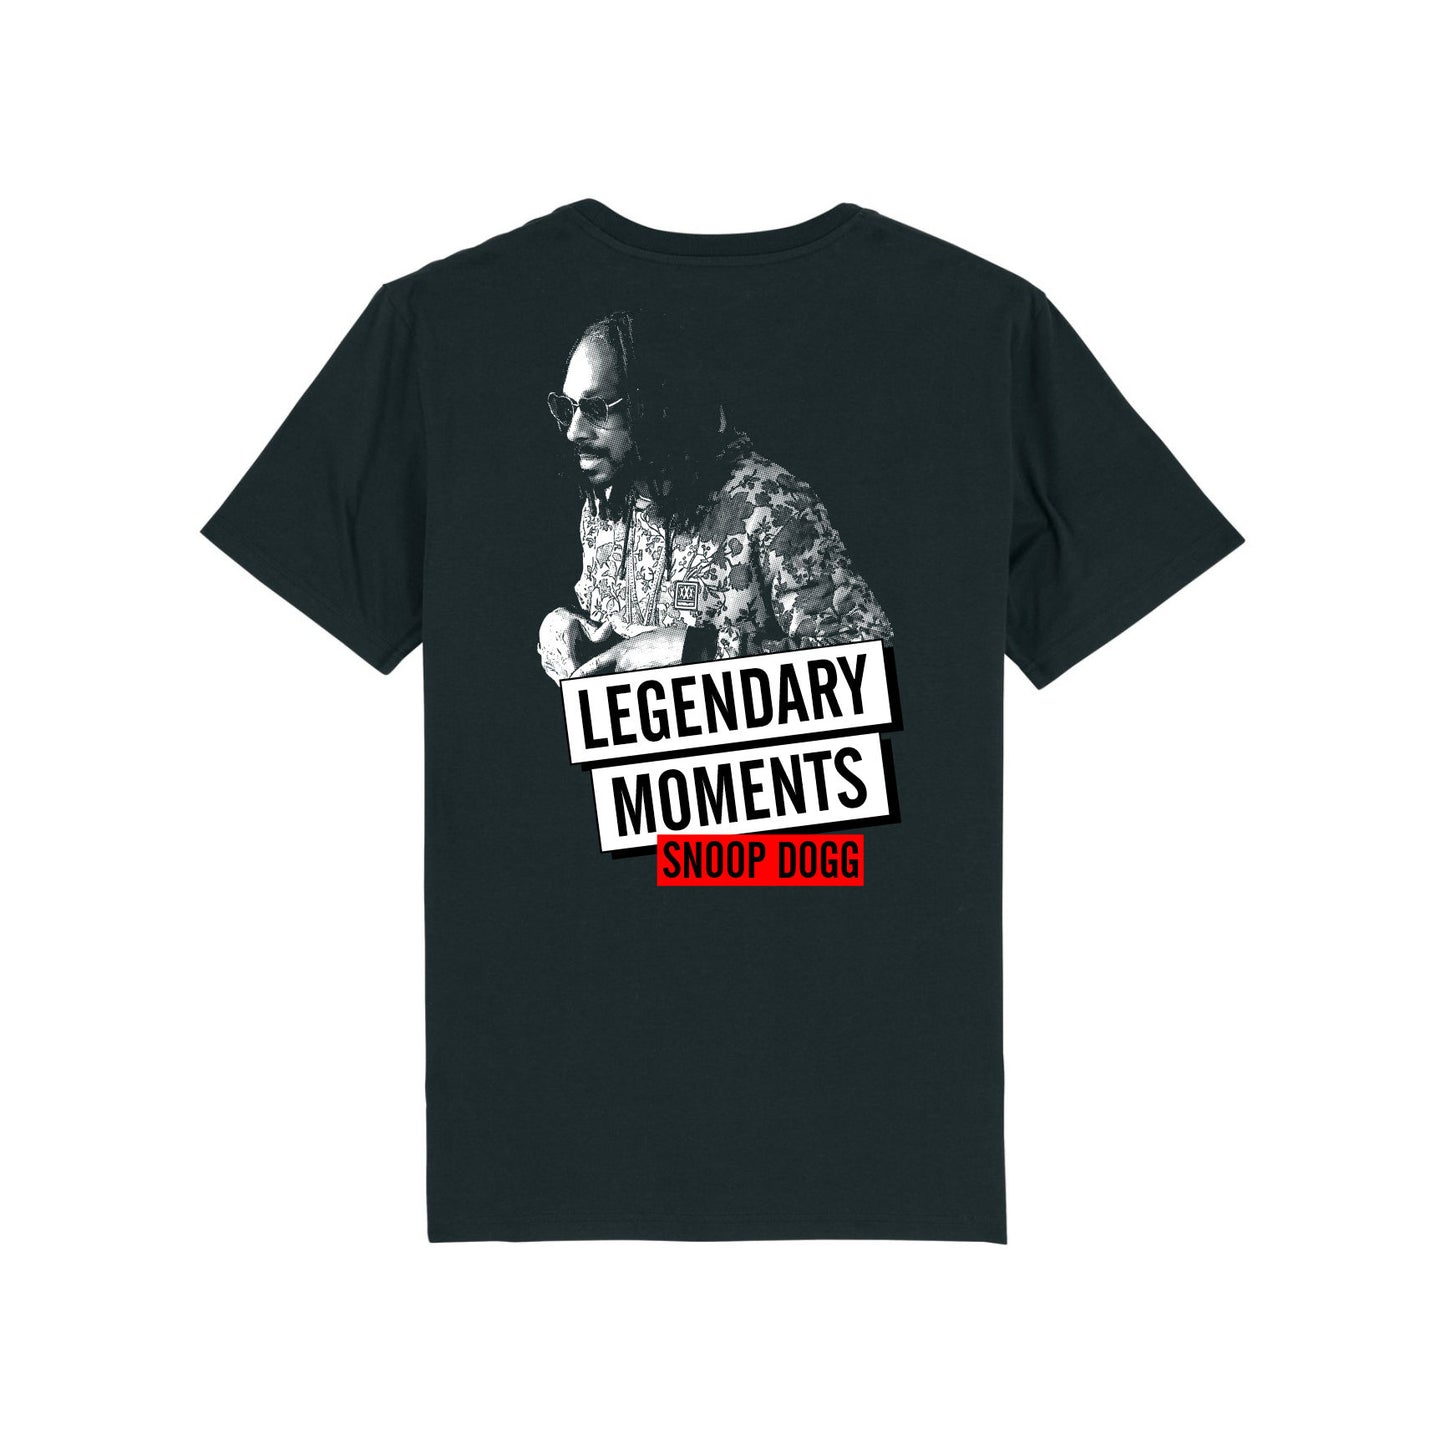 LIMITED EDITION - Legendary Moments - Snoop Dogg - Unisex T-Shirt - Black